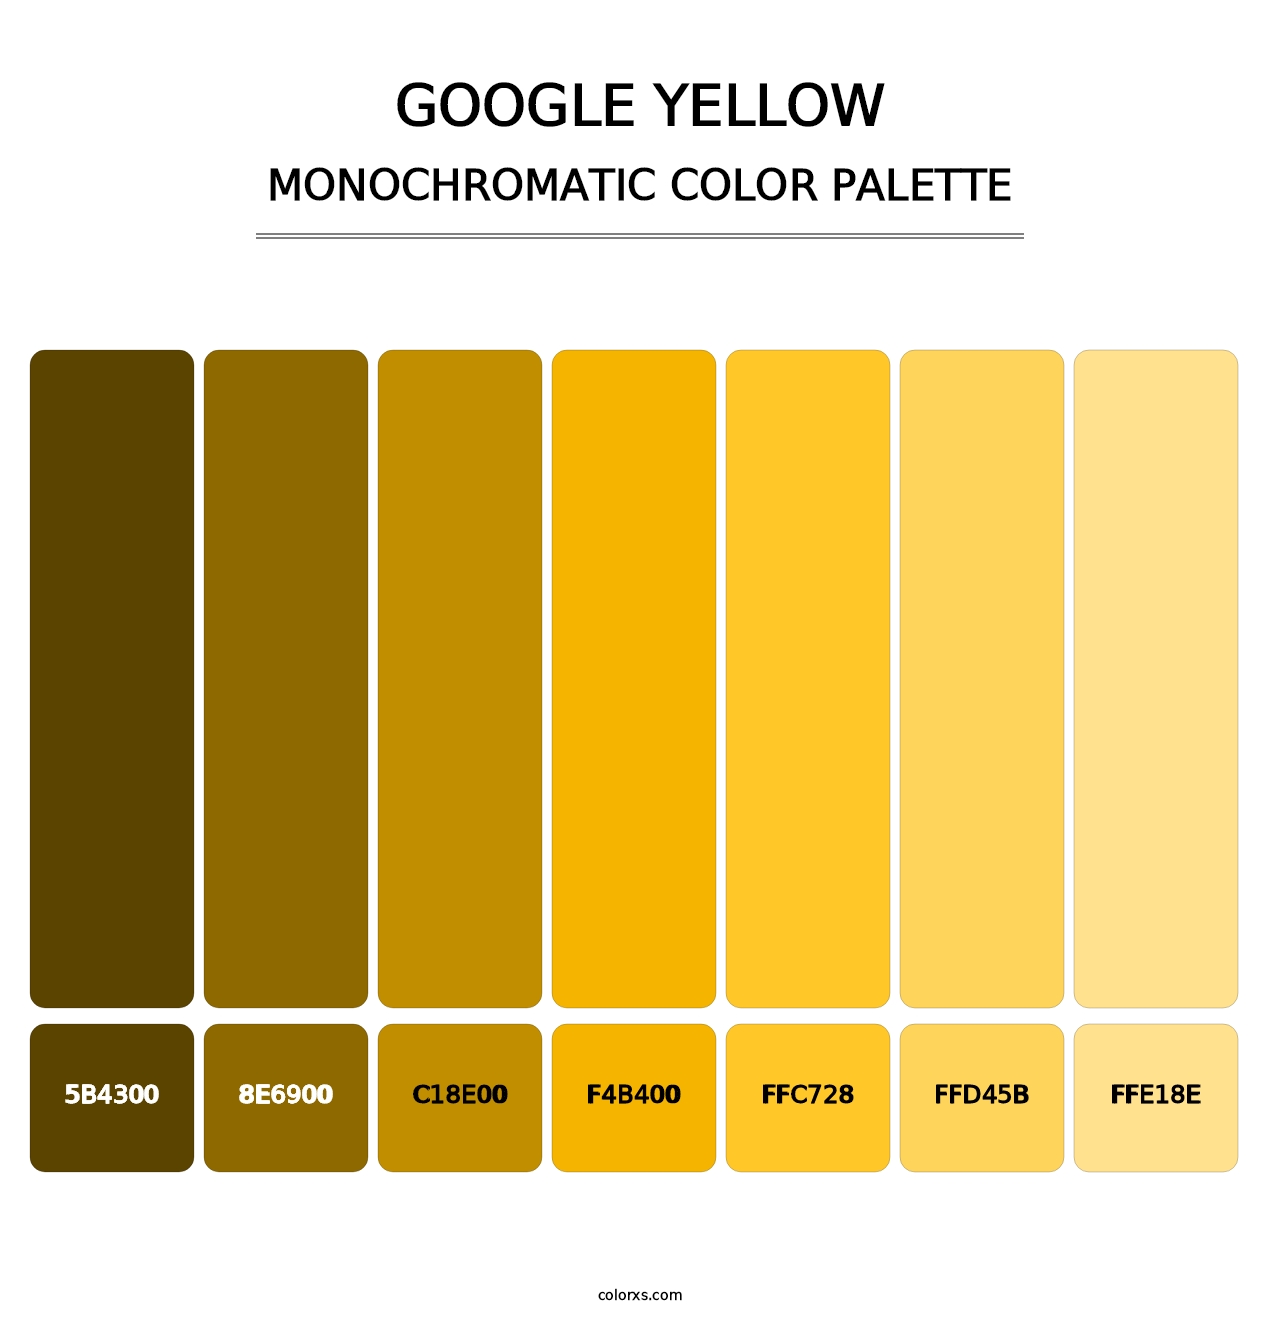 Google Yellow - Monochromatic Color Palette